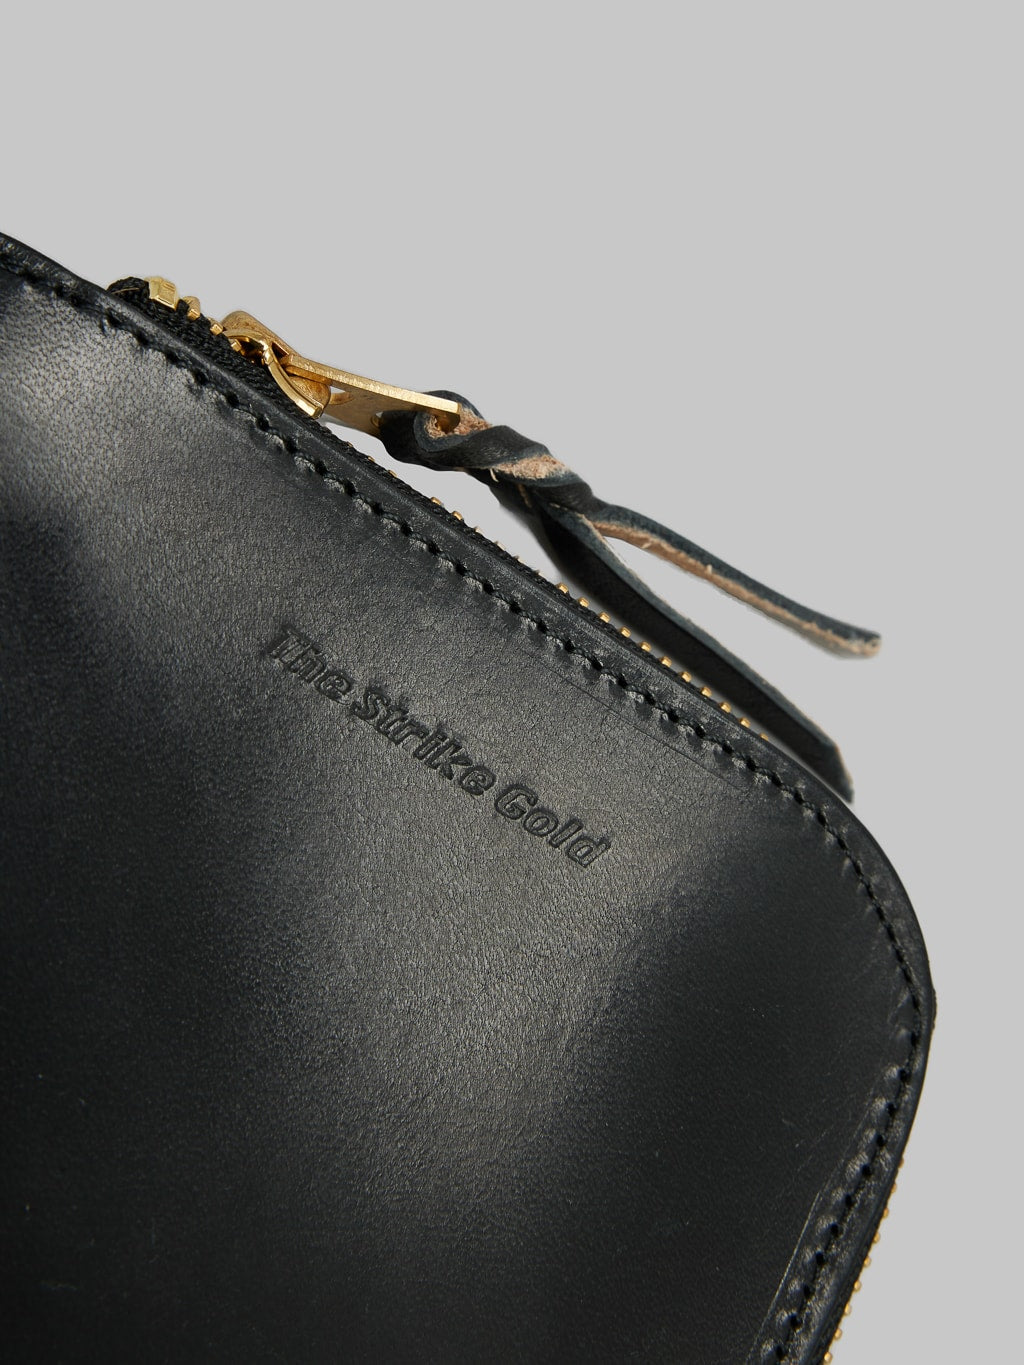 The Strike Gold Leather Zip Wallet Black artisanal engraved logo